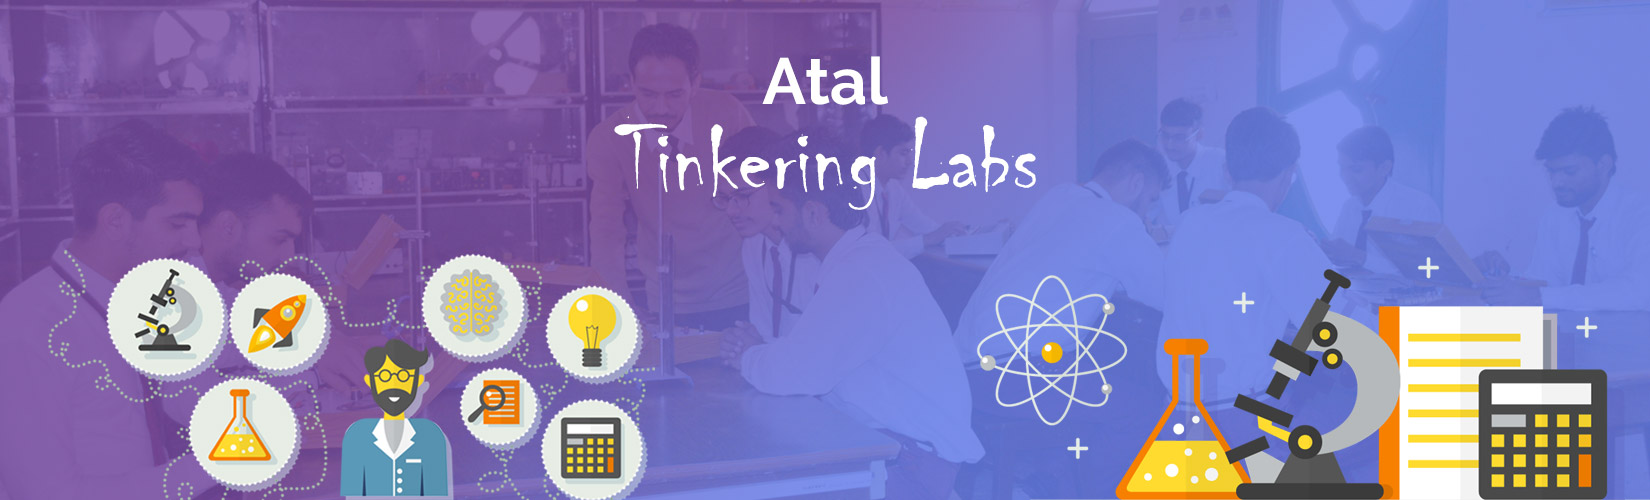 Atal Tinkering Labs